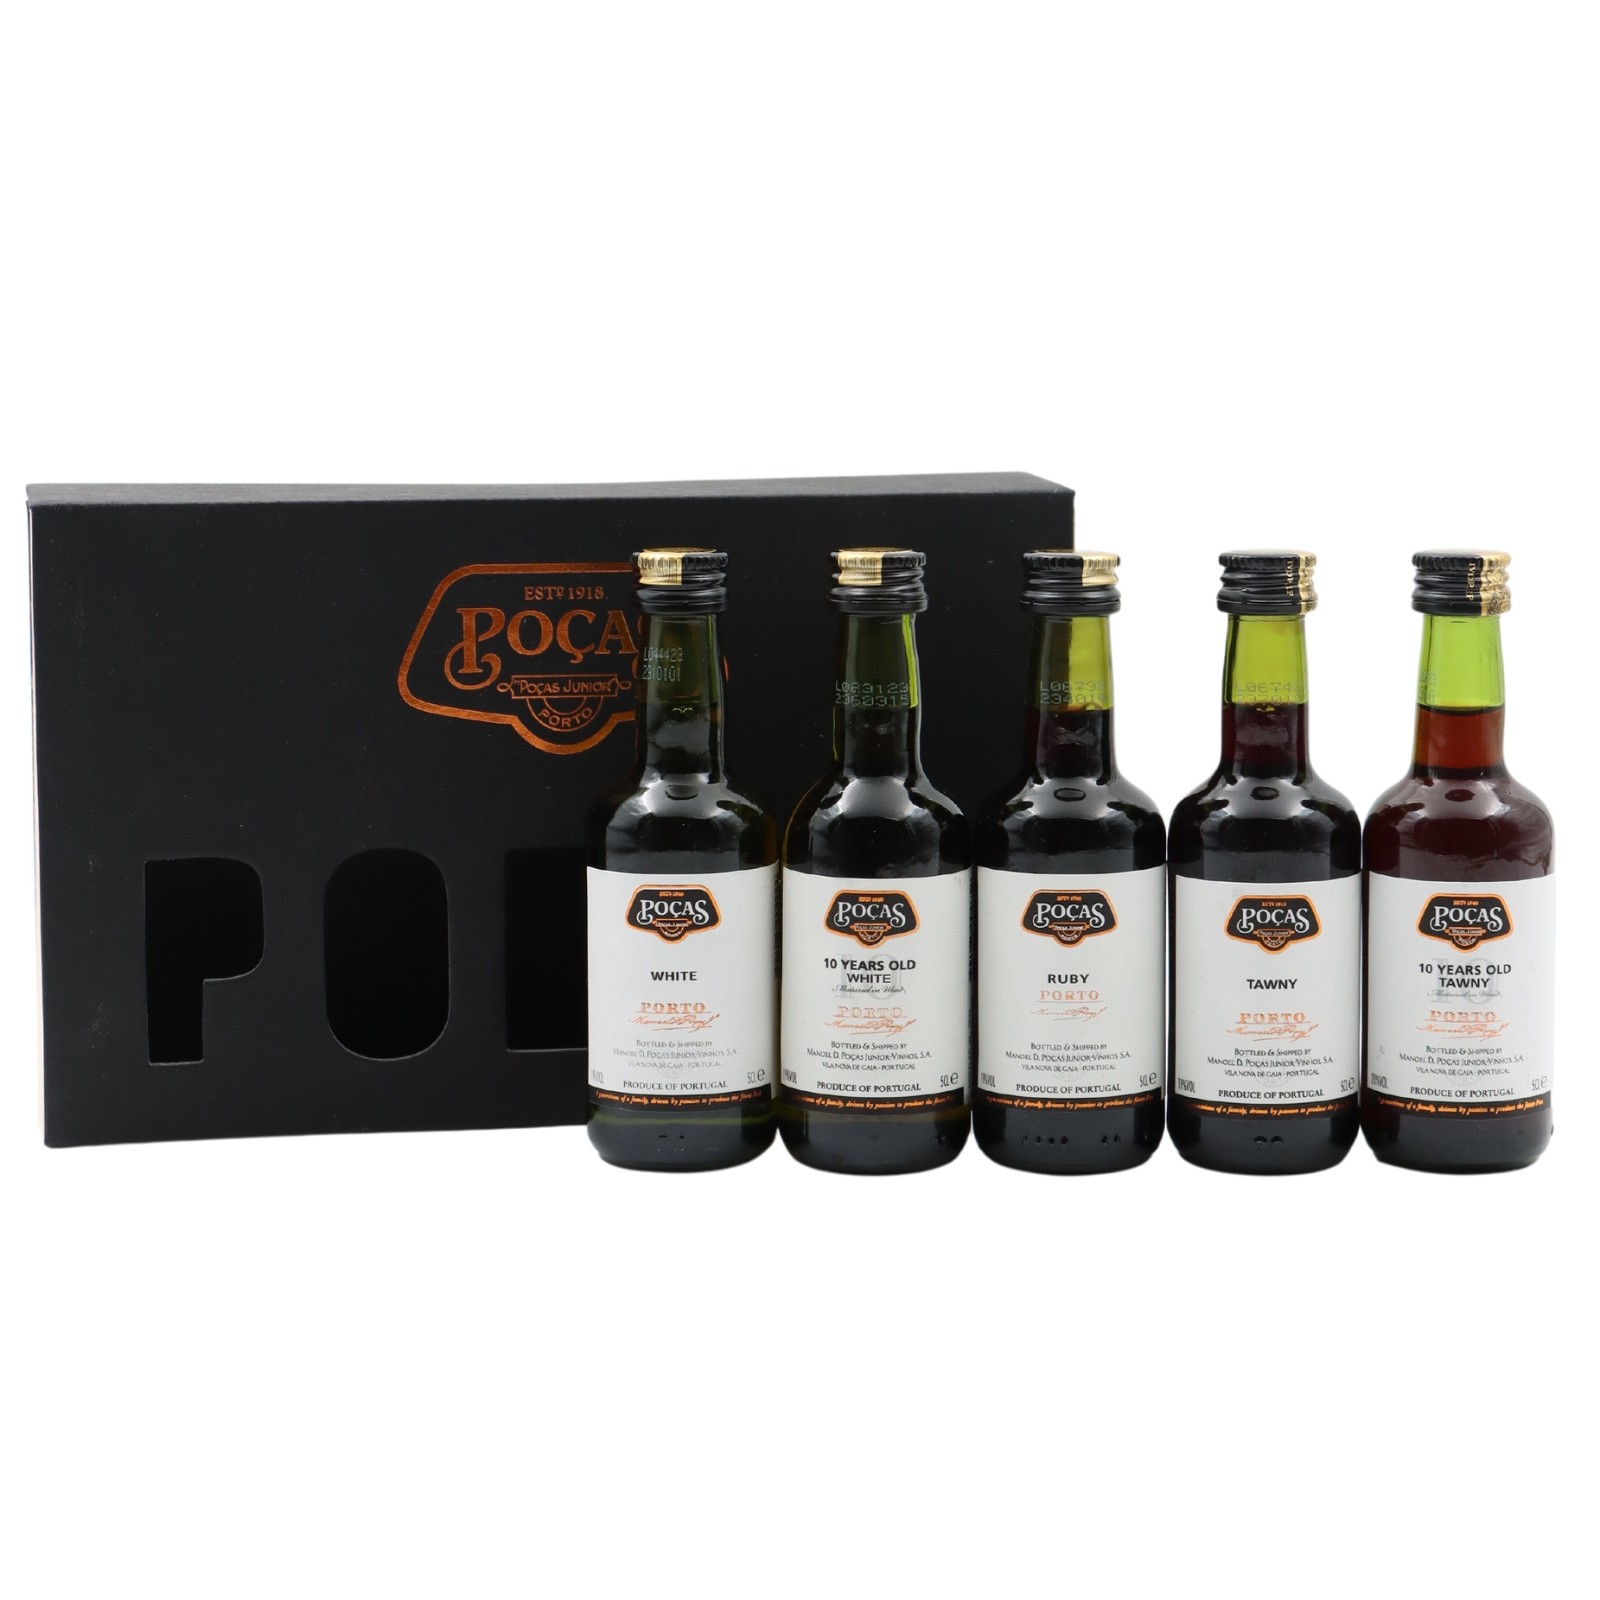 Poças 5 Classic Port Wines